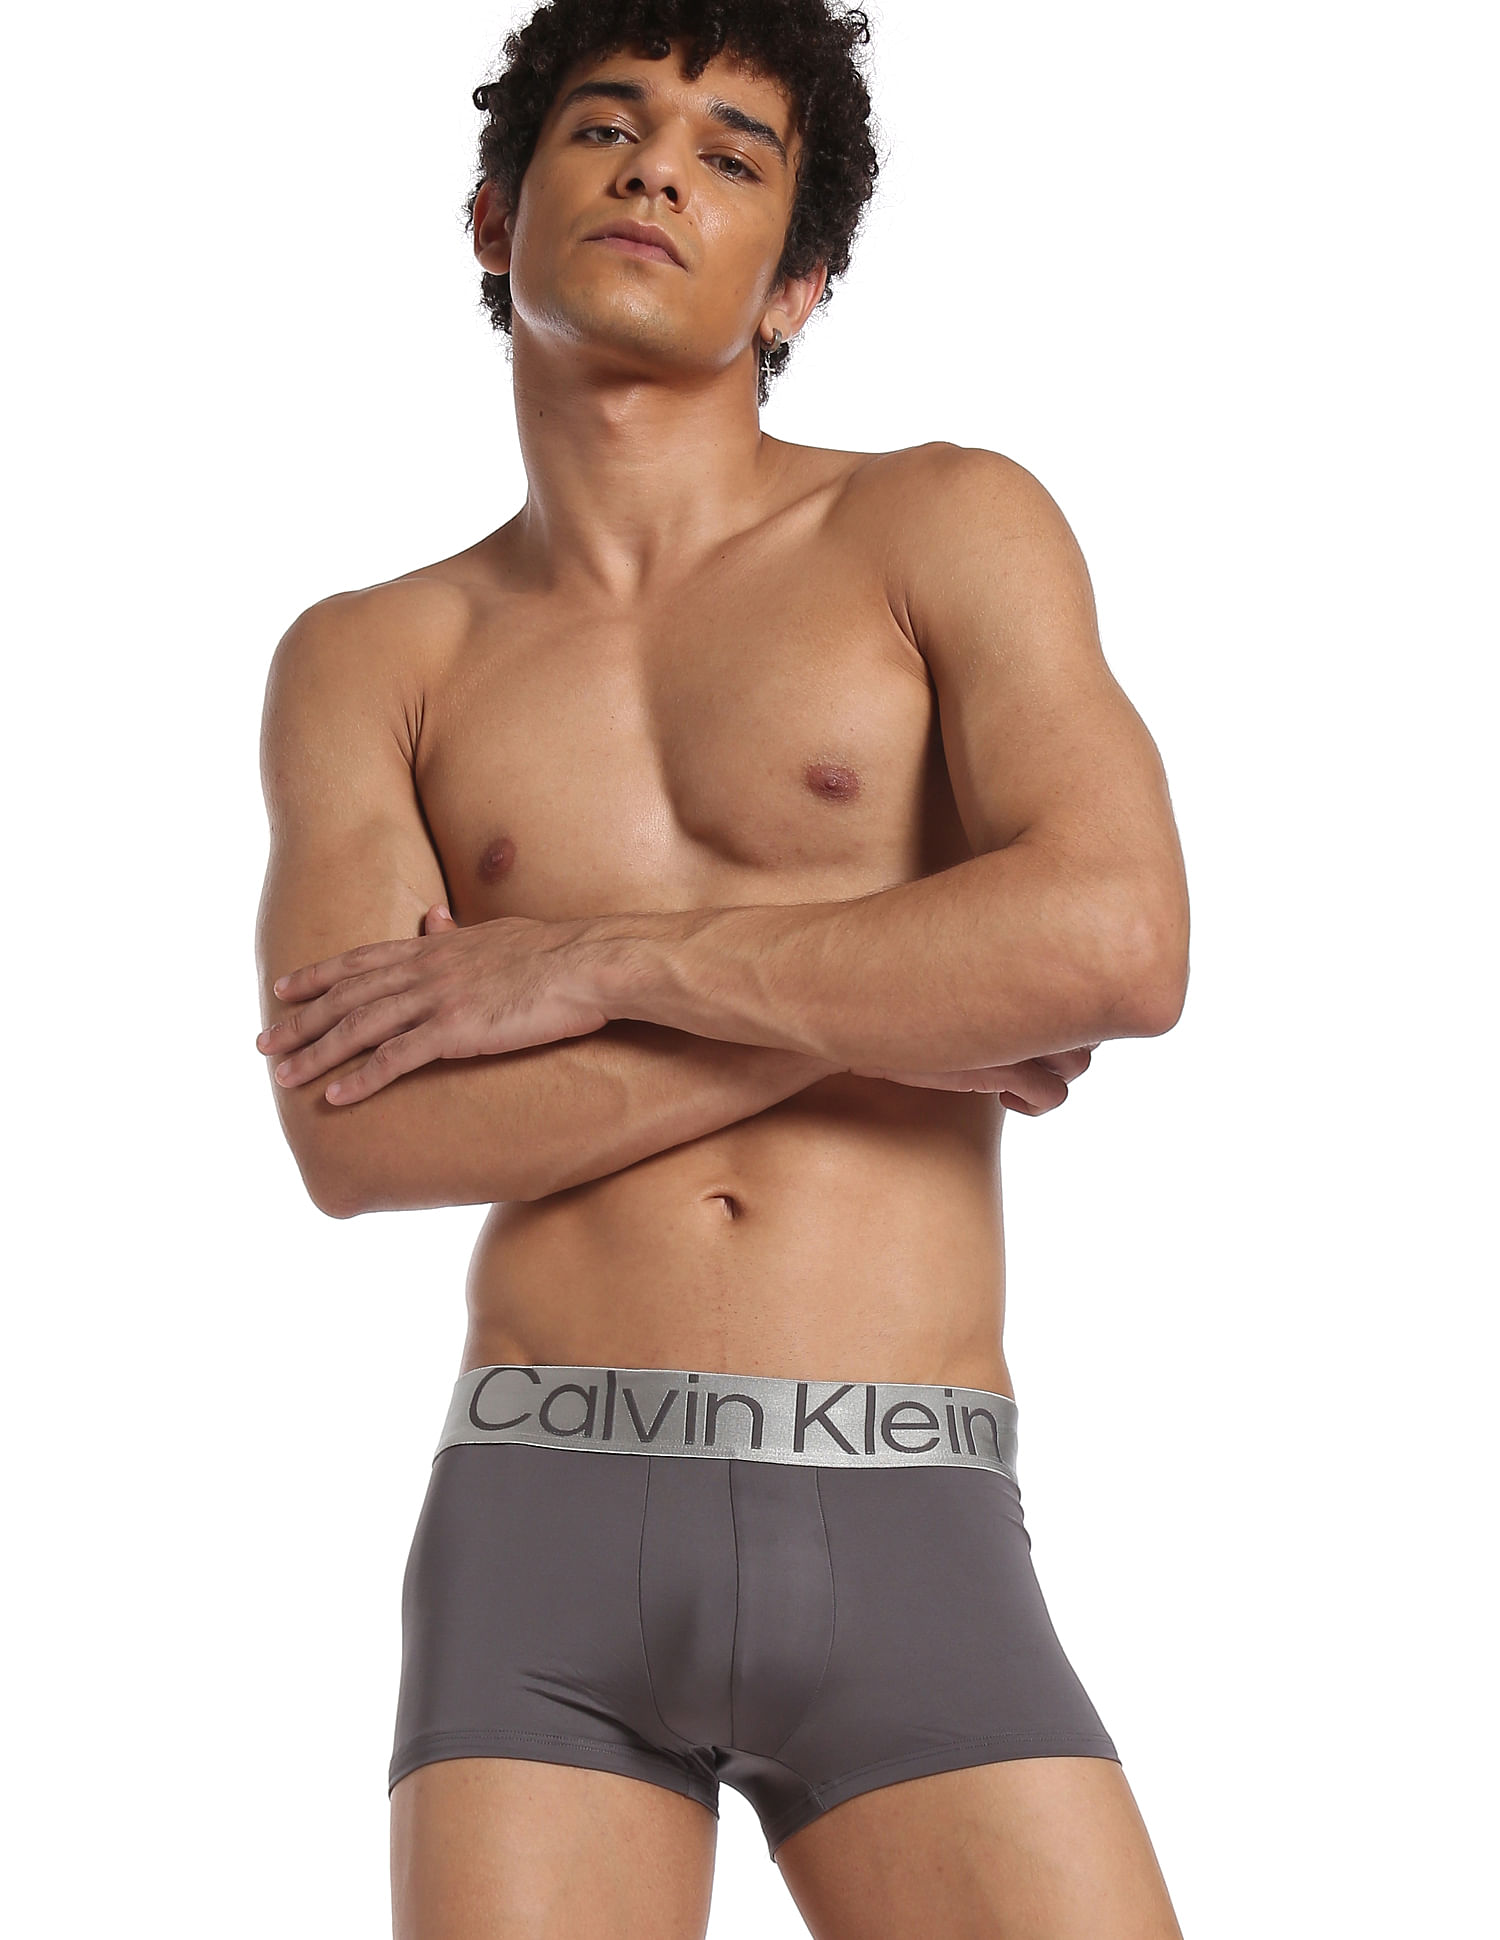 Buy Calvin Klein Underwear Men Assorted Low Rise Solid Trunks - Pack Of 3 